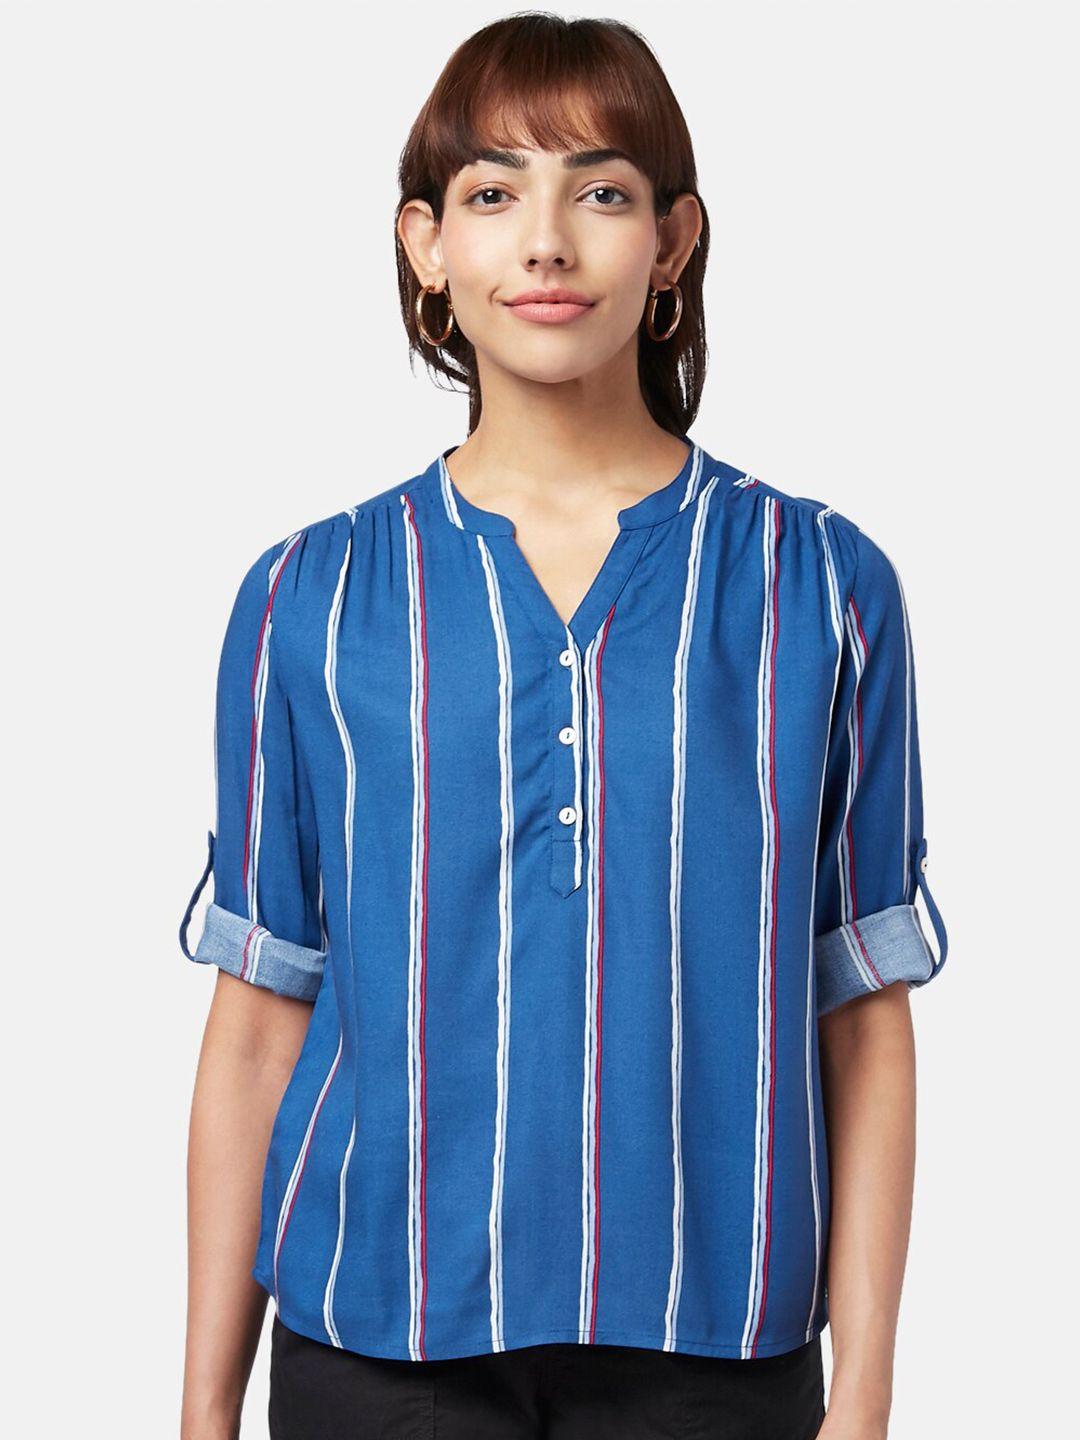 honey-by-pantaloons-blue-striped-mandarin-collar-roll-up-sleeves-shirt-style-top